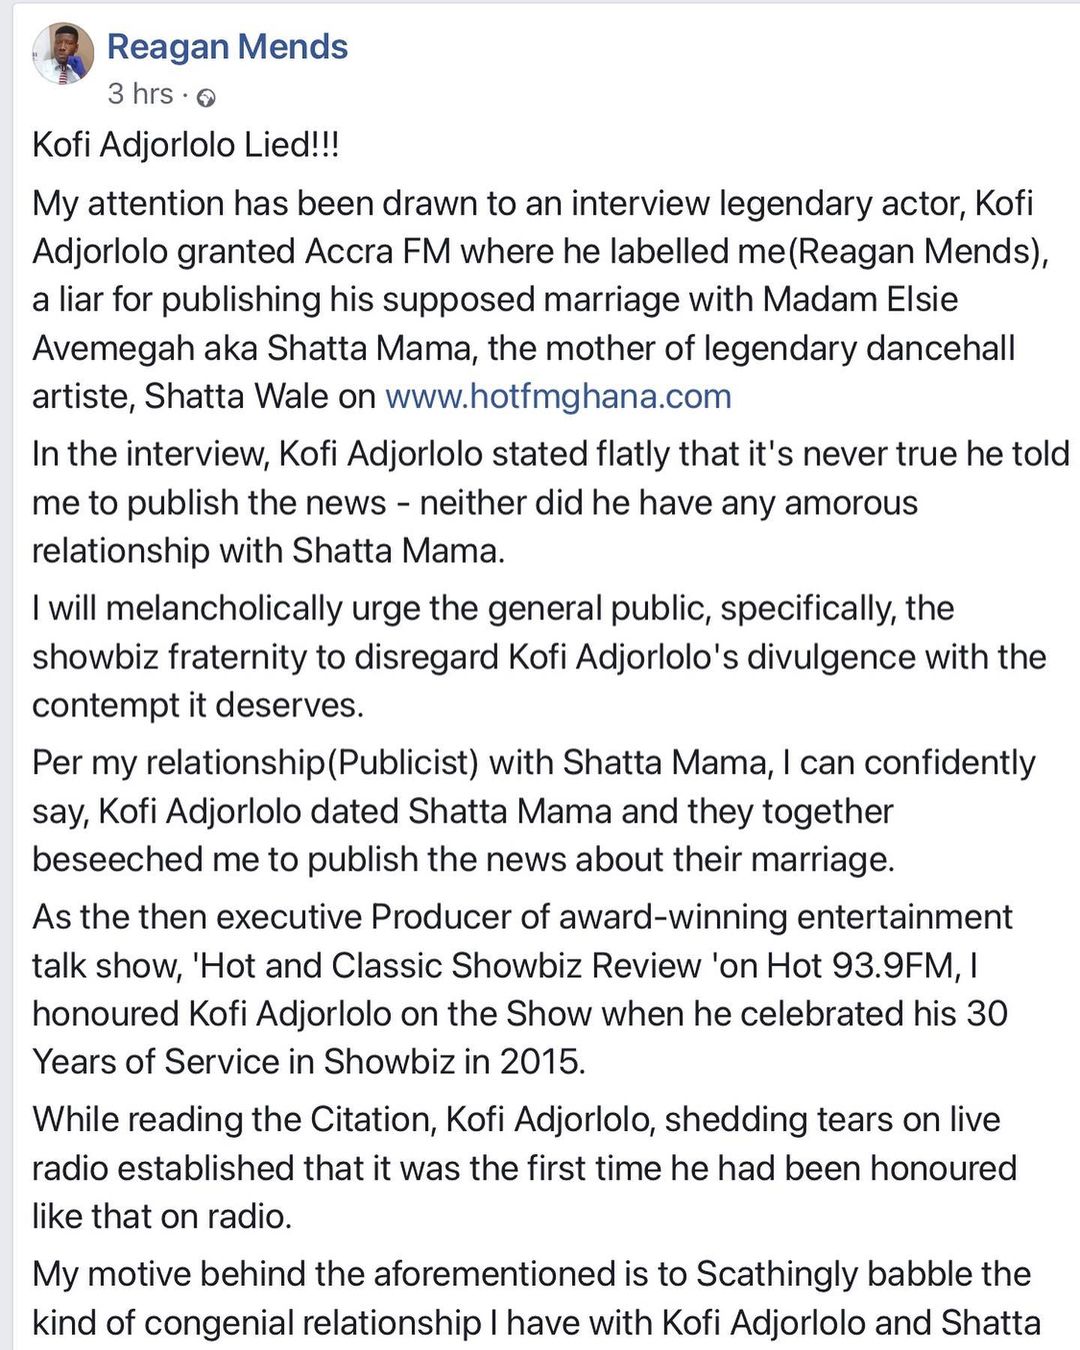 Kofi Adorlolo denial 